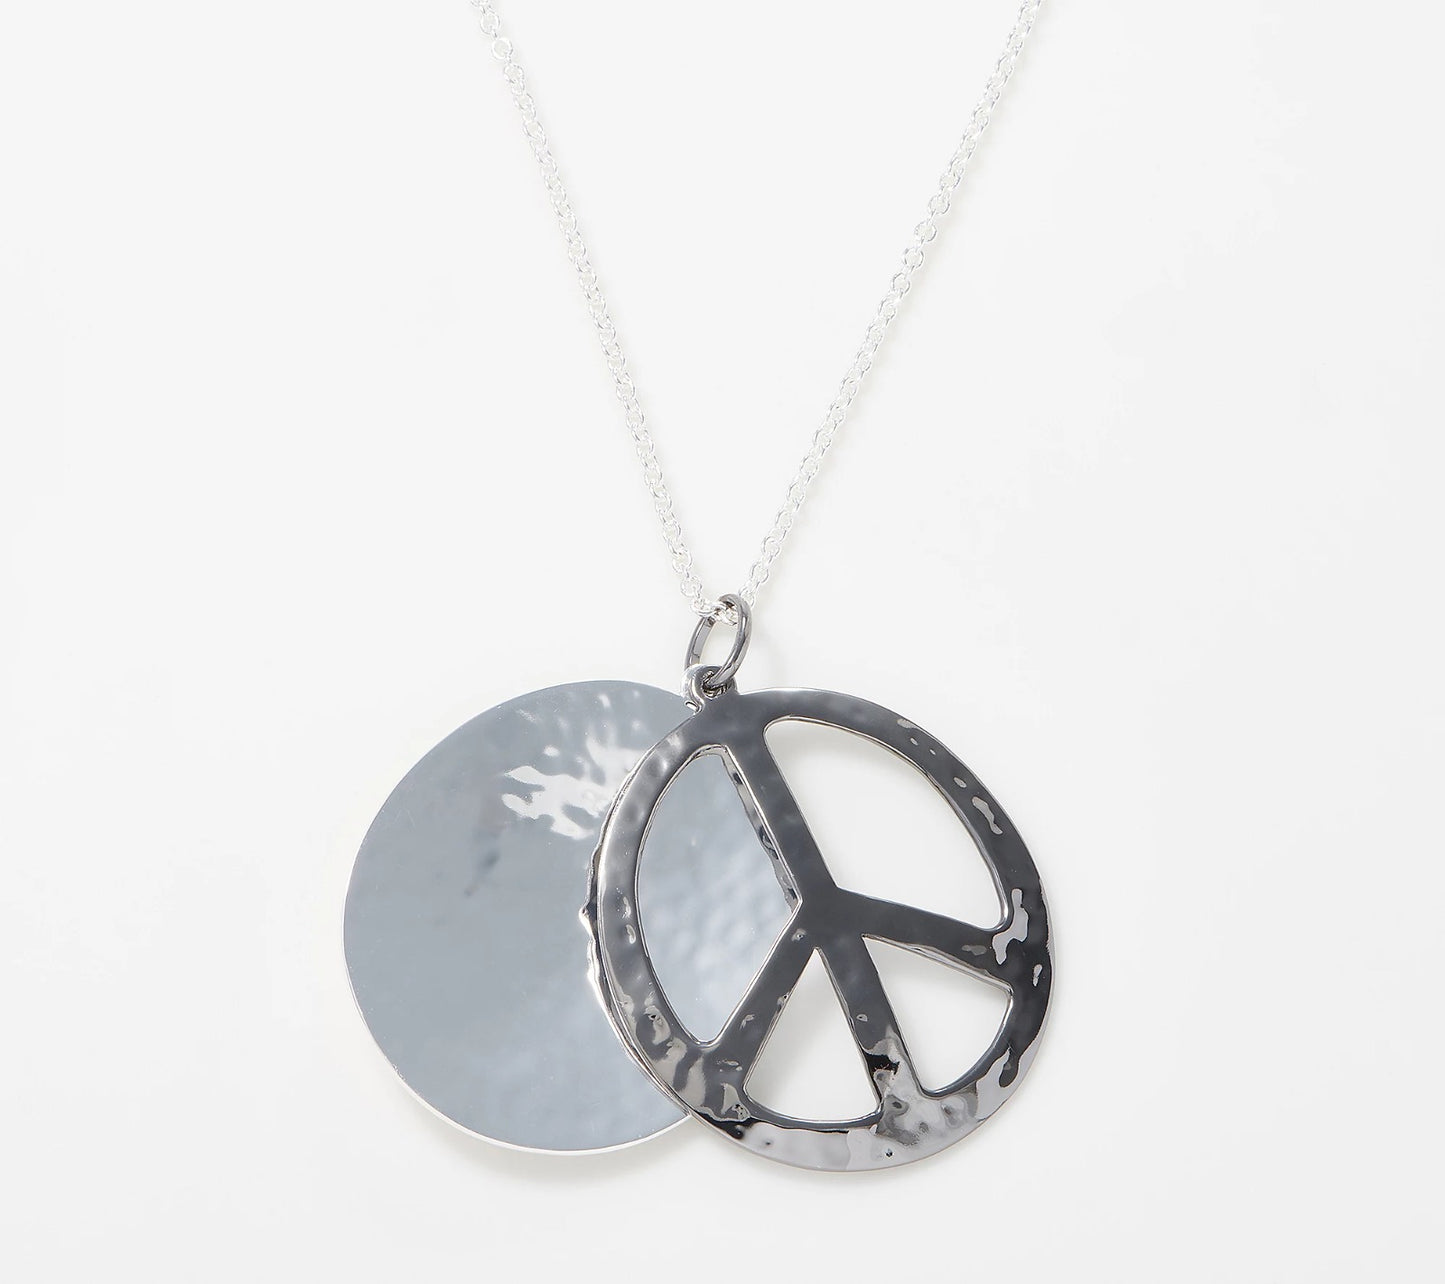 RLM Bronze Peace Sign Iconic Symbol Pendant Necklace, Silver Tone, Size 29.5"